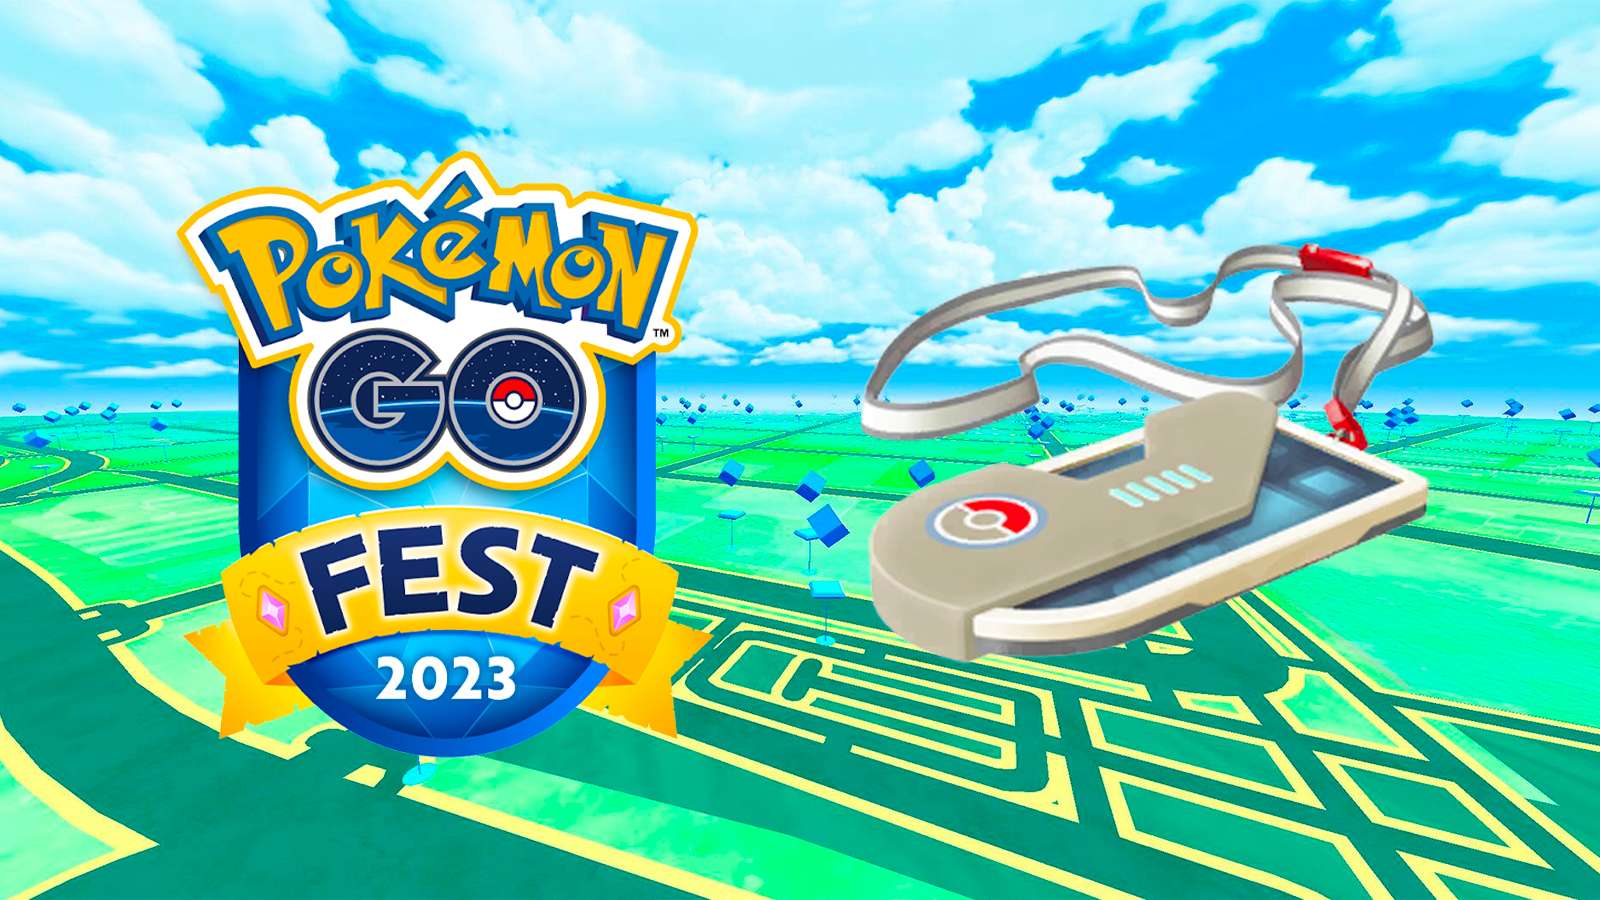 A Pokemon Go Fest 2023 ticket